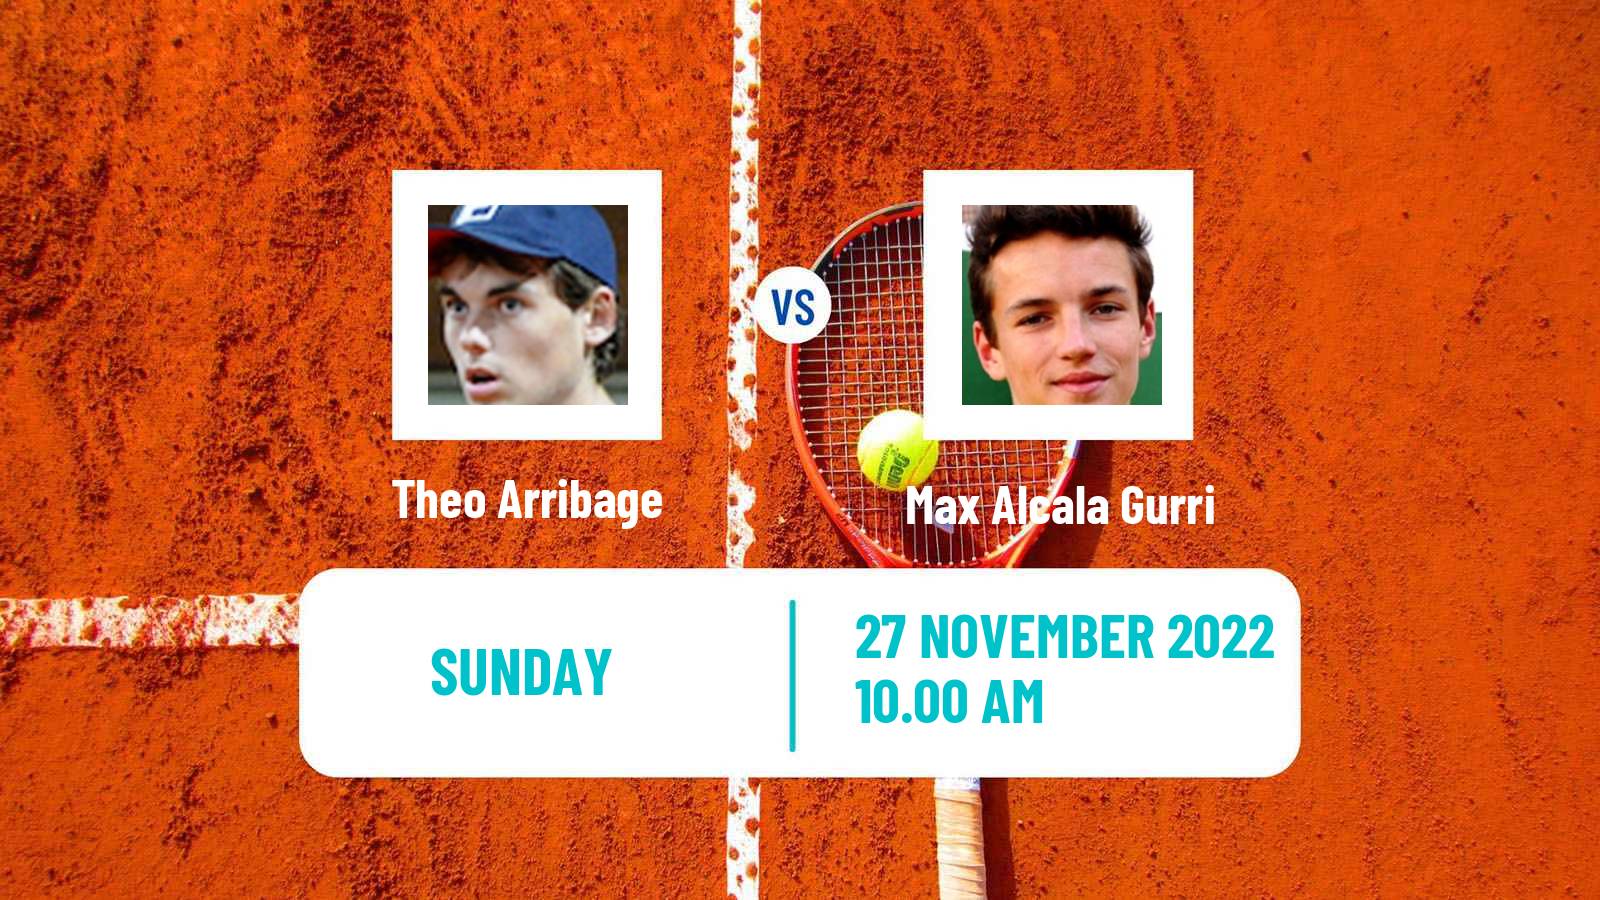 Tennis ATP Challenger Theo Arribage - Max Alcala Gurri